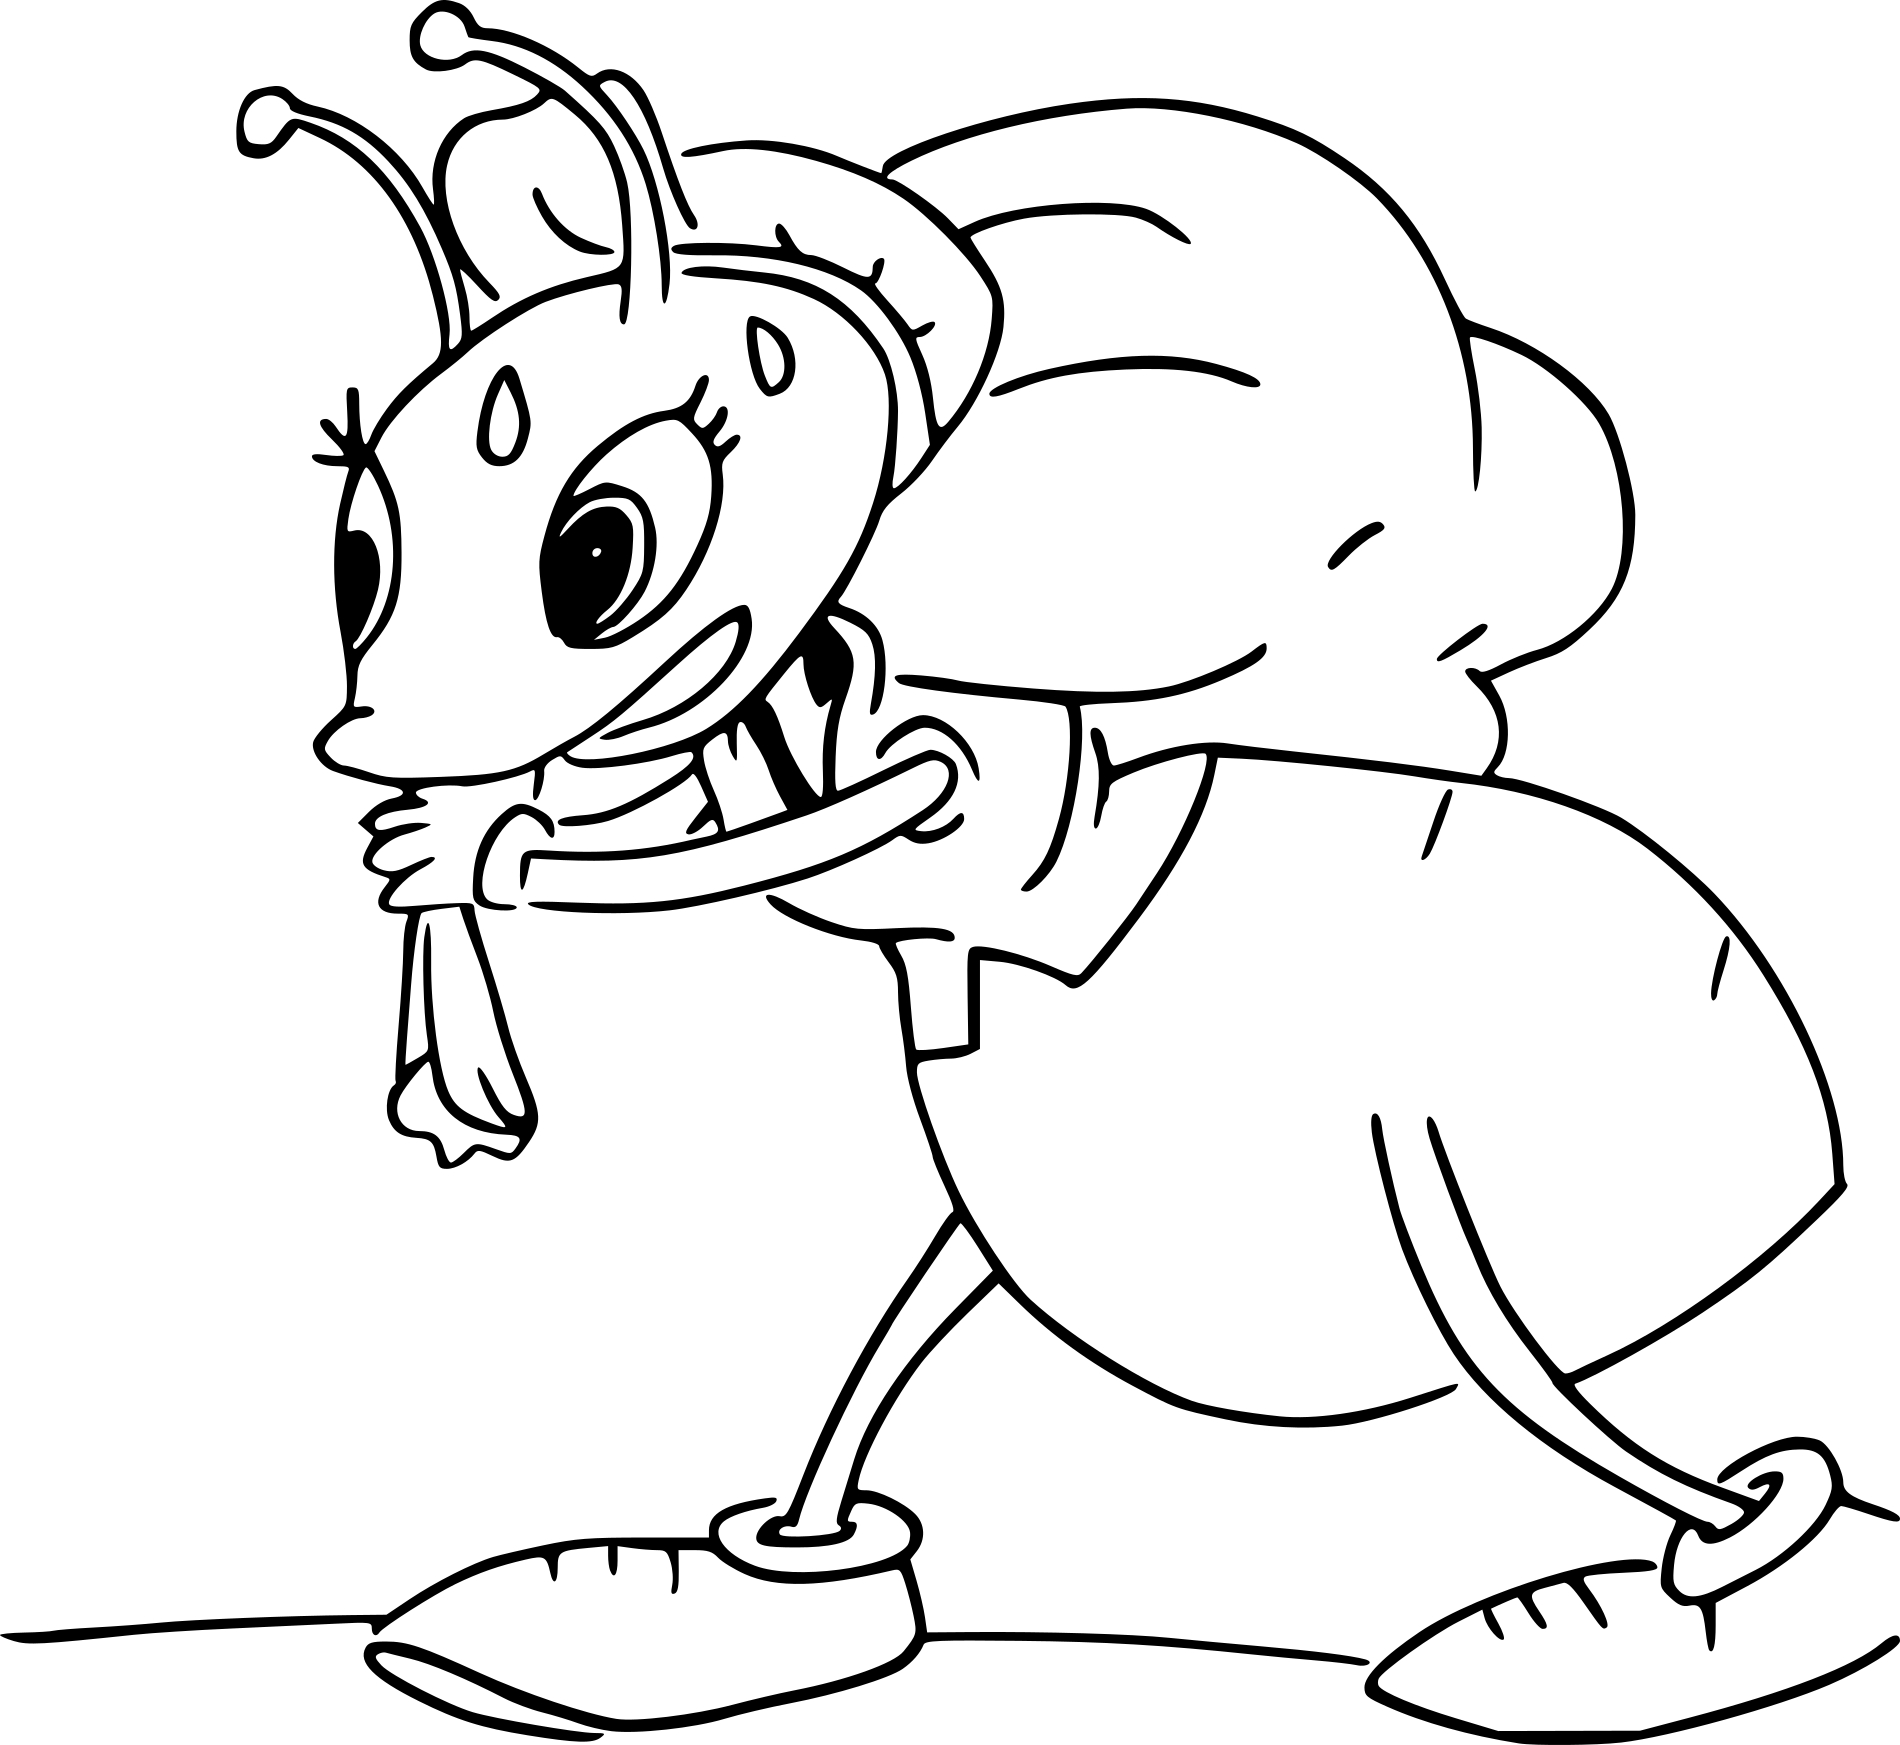 Humanoid Cicada coloring page